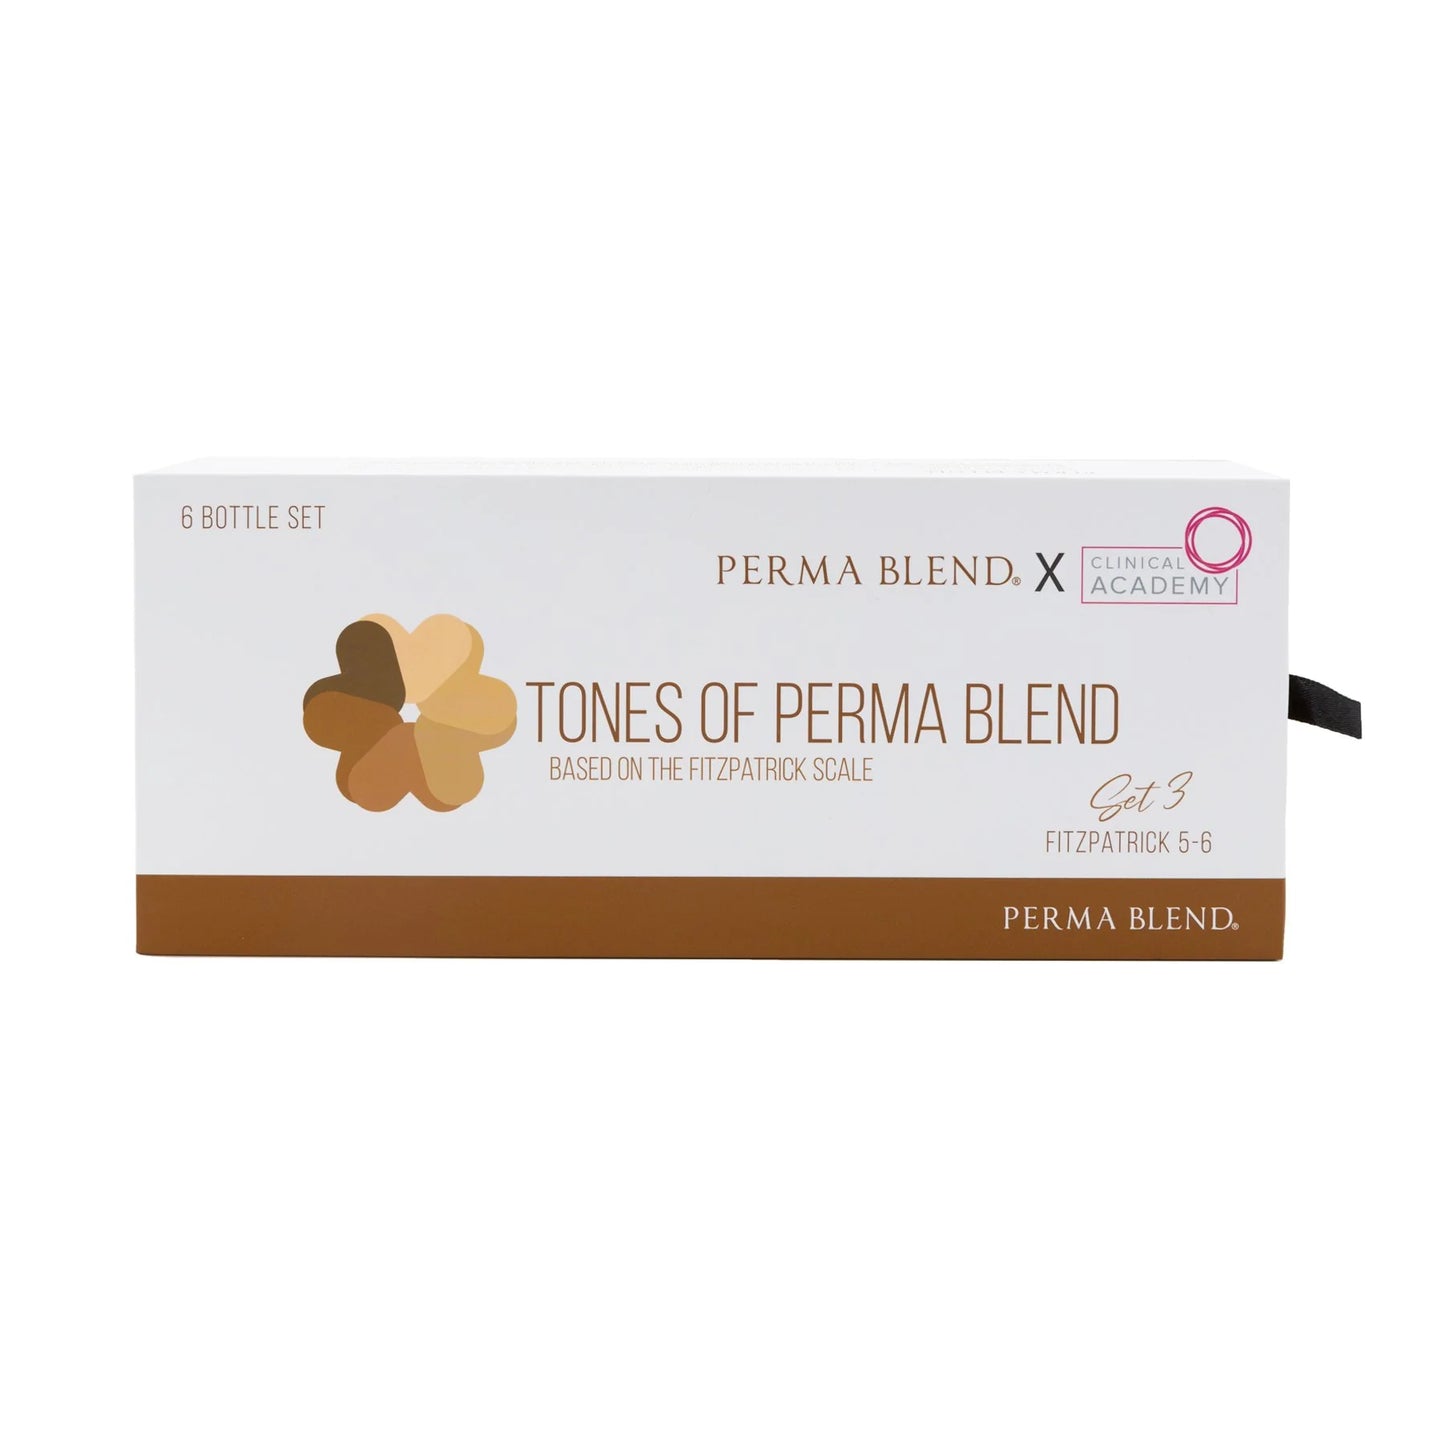 Tones of Perma Blend Fitzpatrick 5-6 Set — Perma Blend — 6 1/2oz Bottles